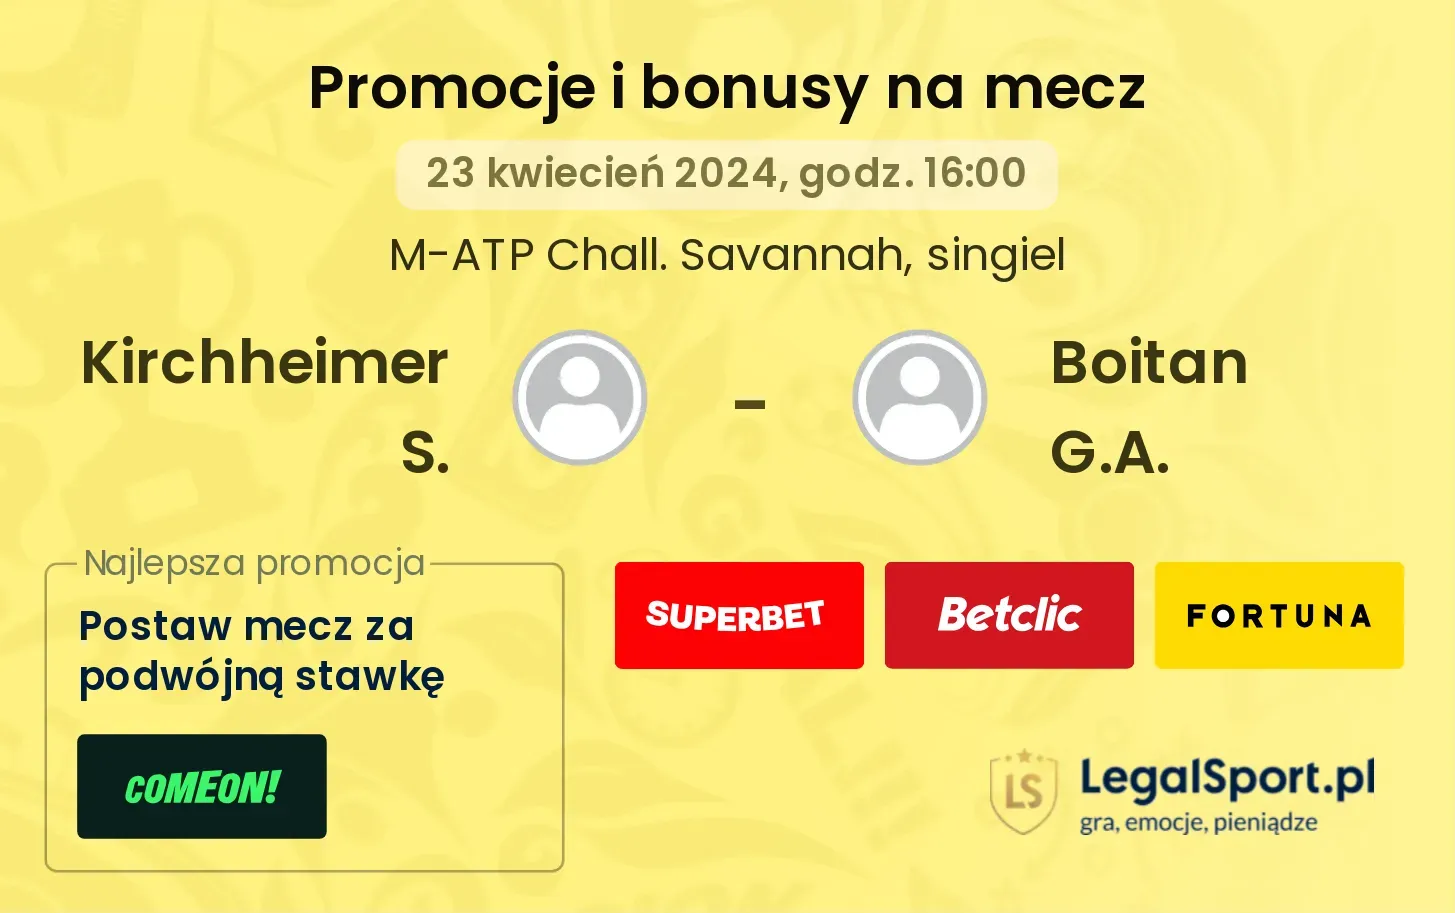 Kirchheimer S. - Boitan G.A. promocje bonusy na mecz